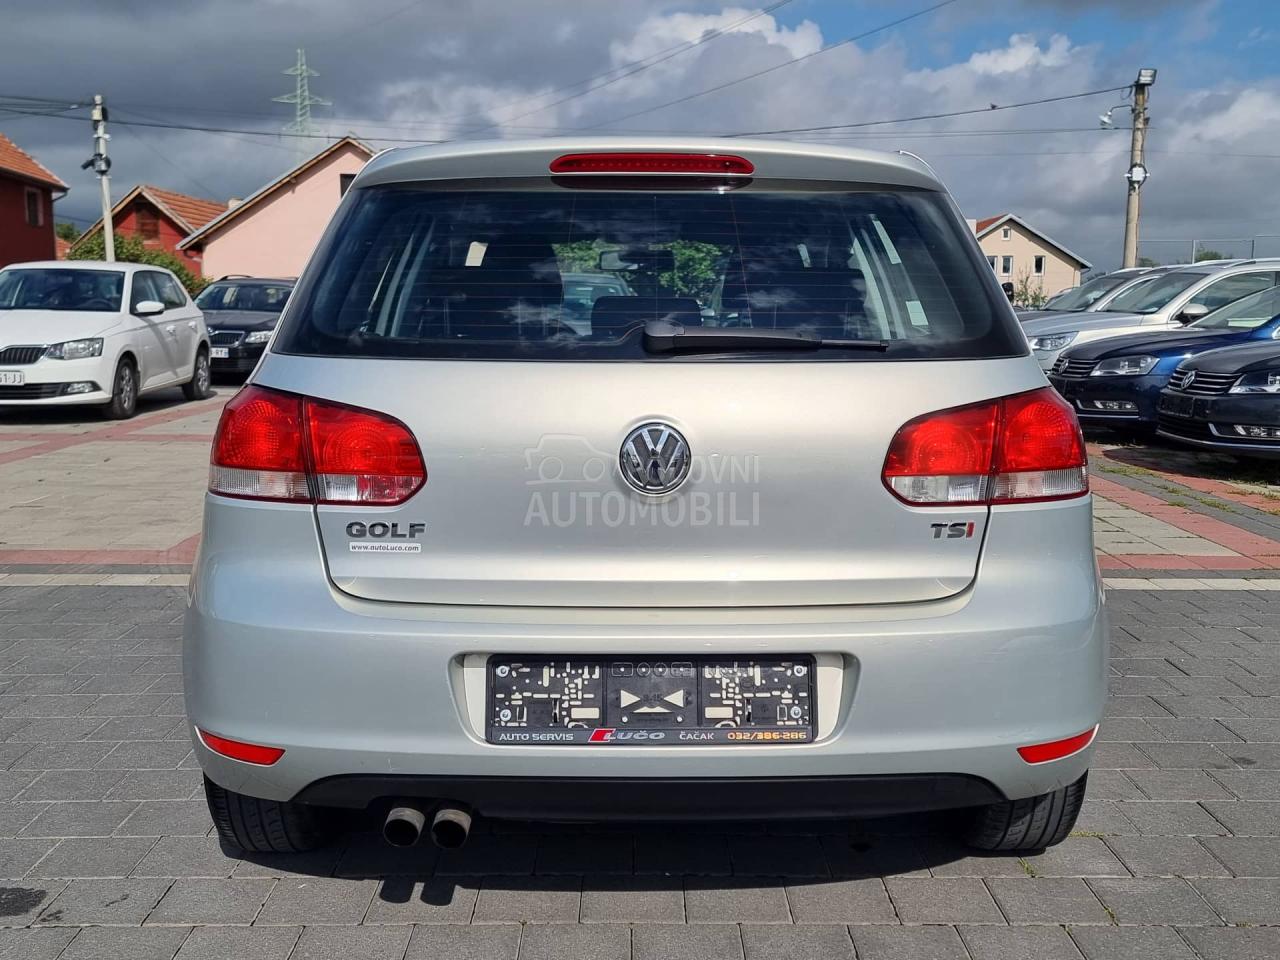 Volkswagen Golf 6 1.4TSI 88 h k m